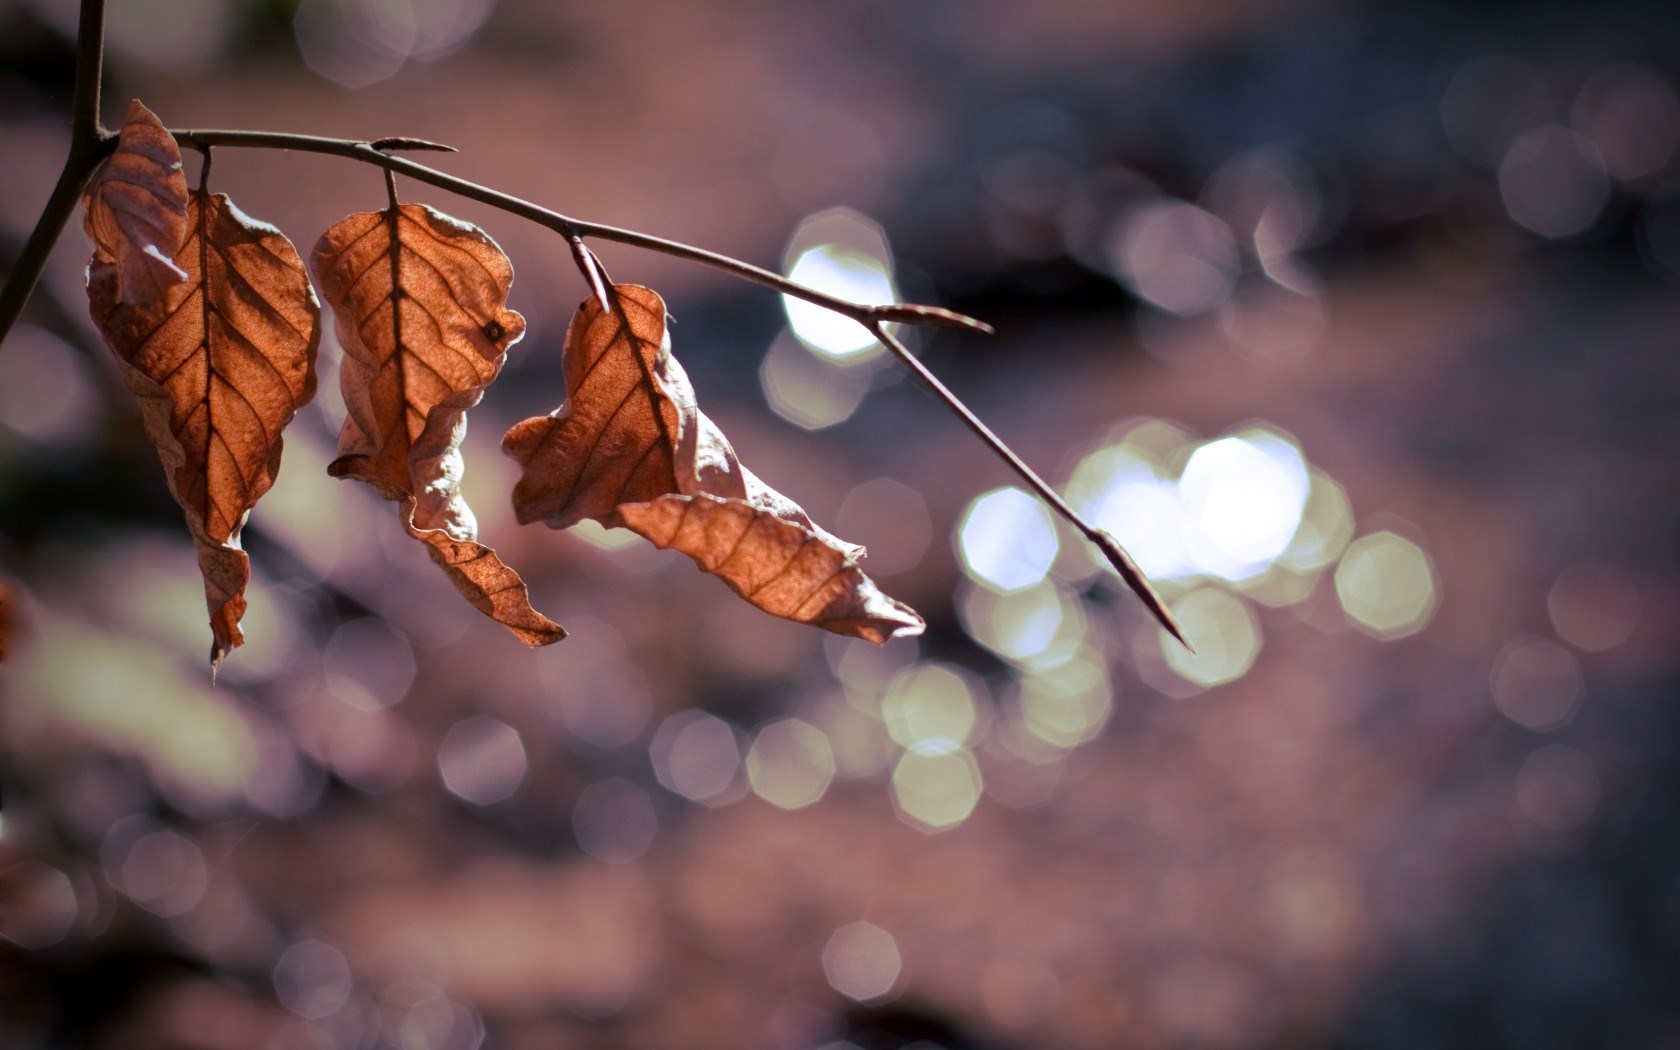 wqxr_leaves-branch-macro-autumn-background-1680x1050.jpg